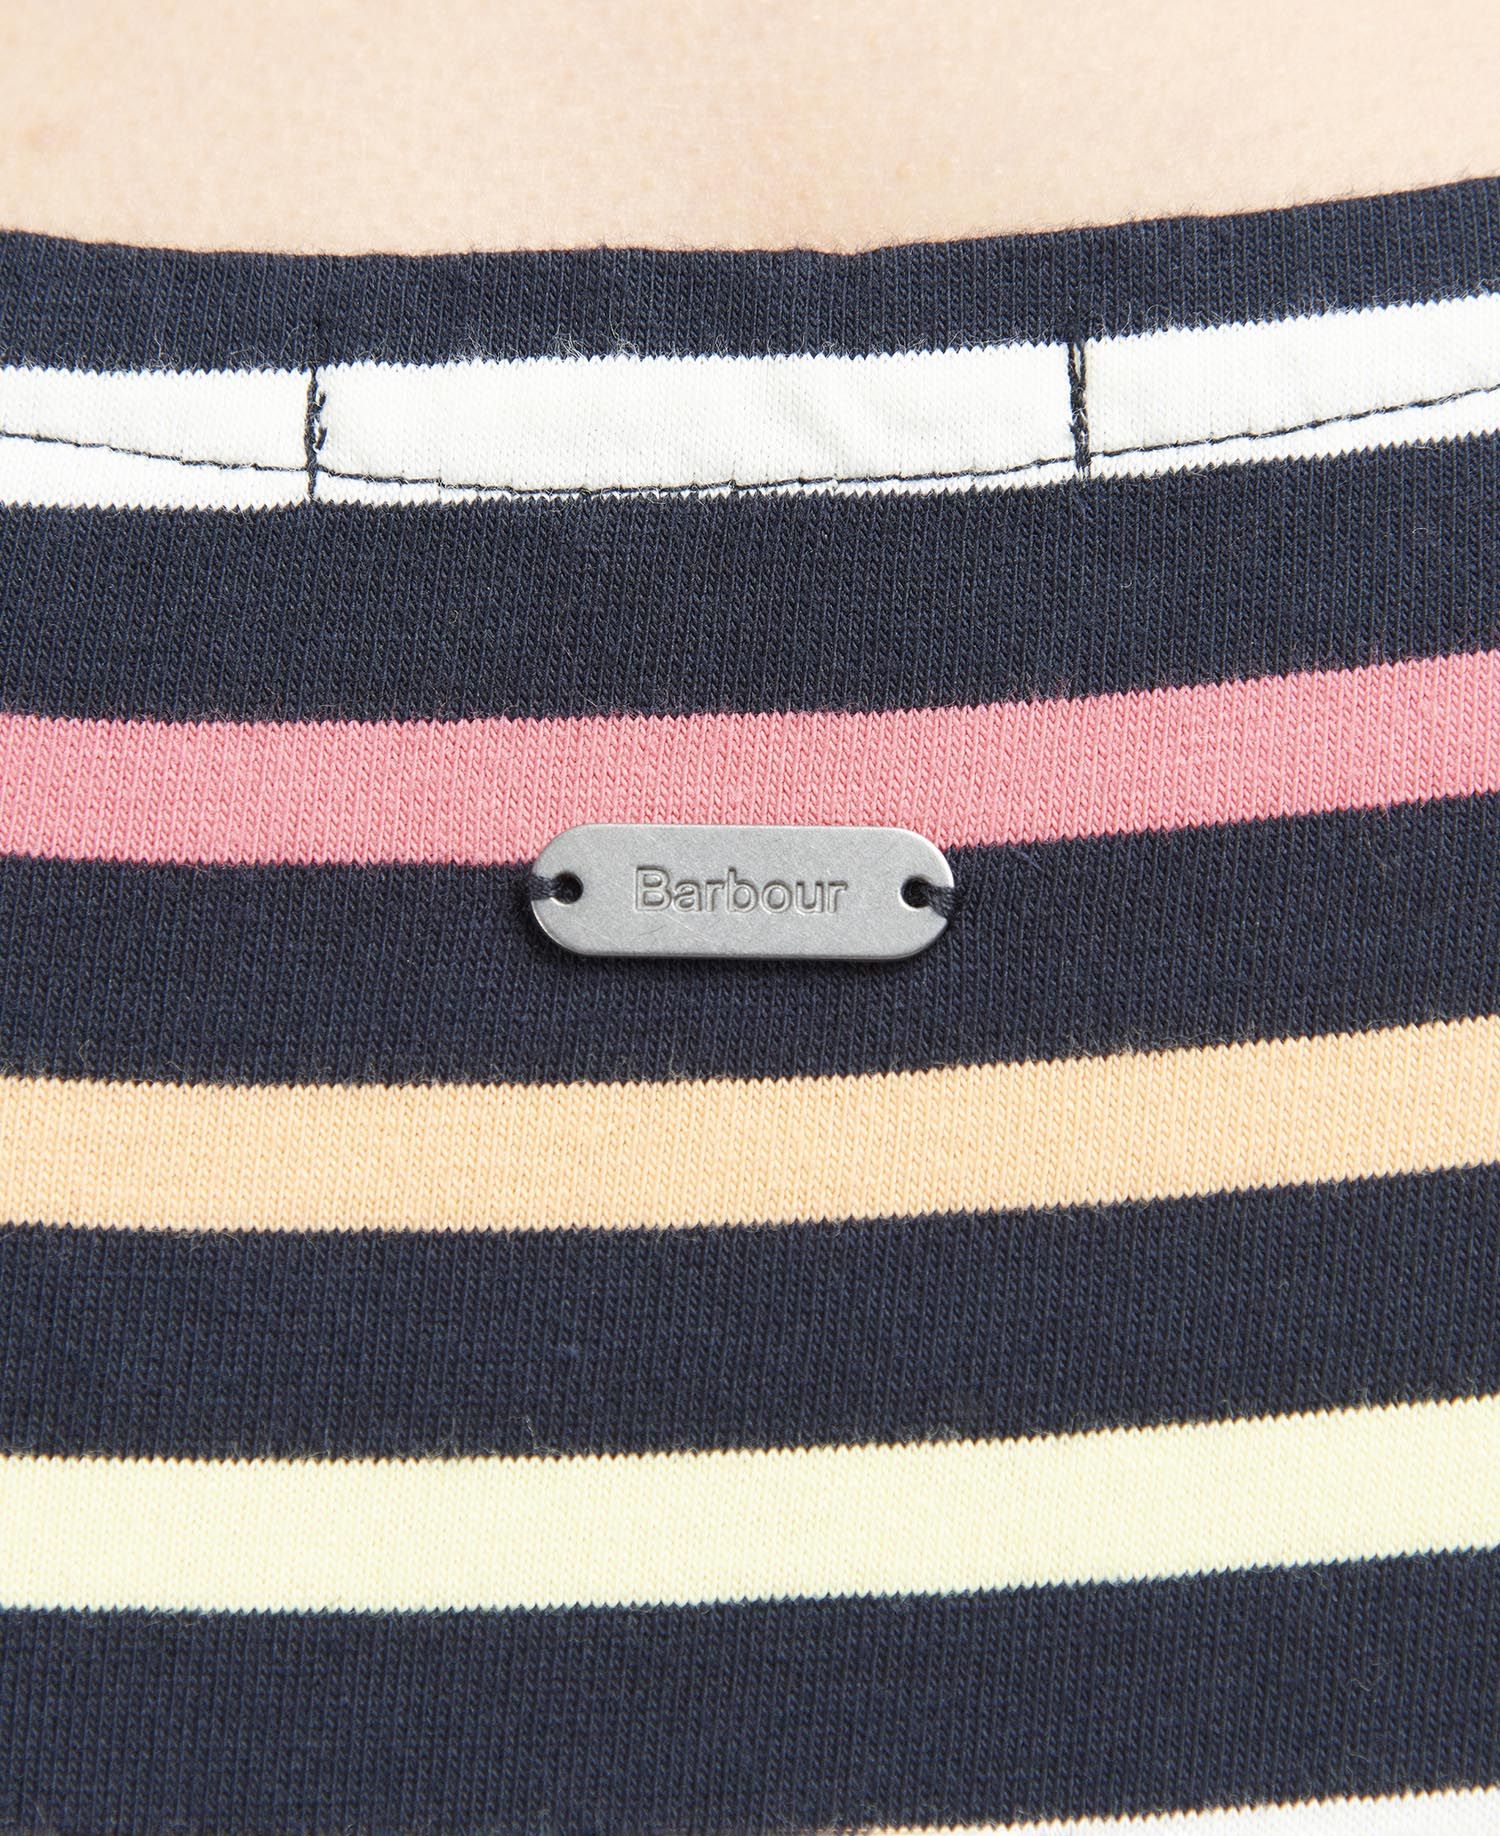 Women's Short Sleeve Bradley Top - Navy Multi Stripe